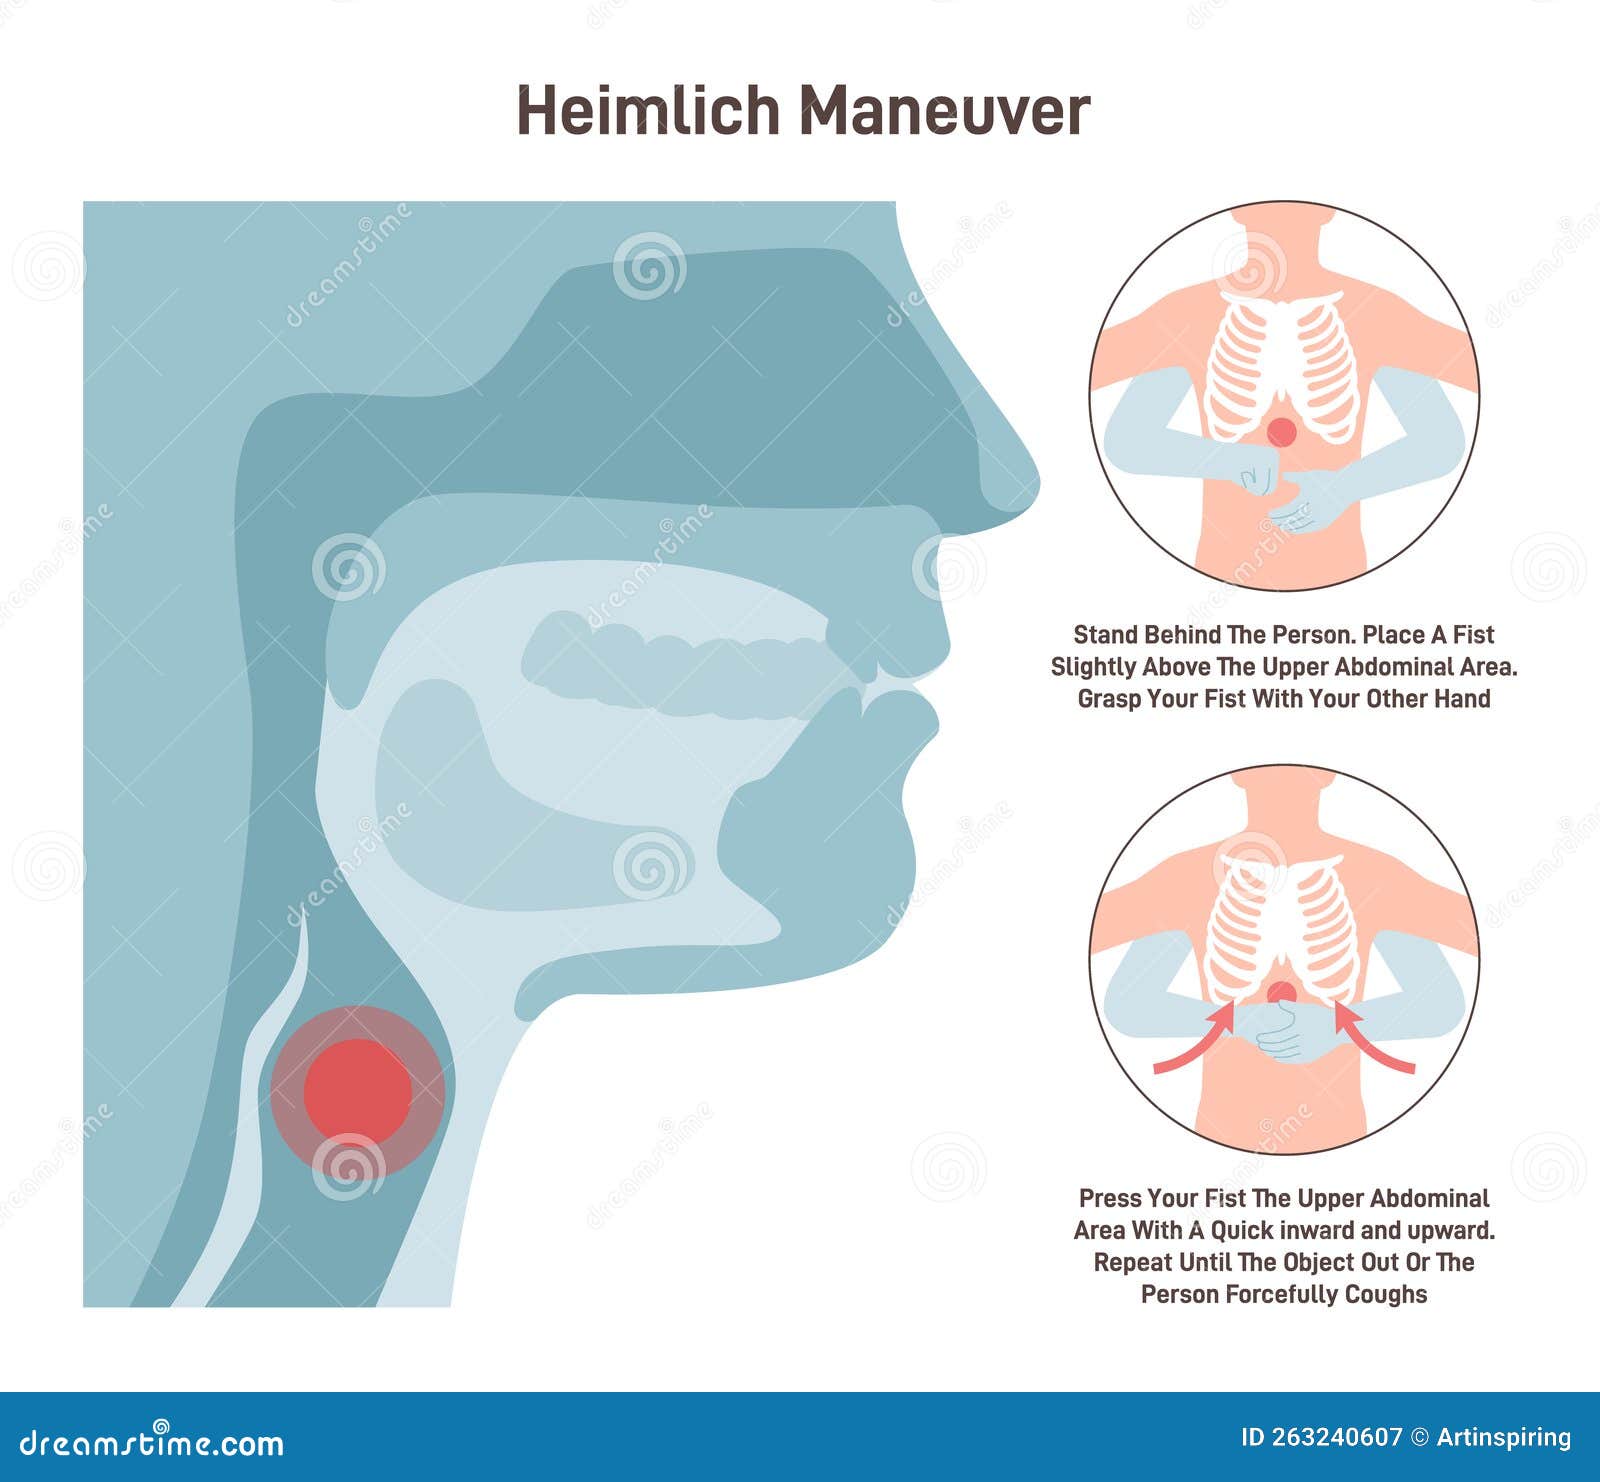 choking first aid. heimlich maneuver procedure to remove a foreign